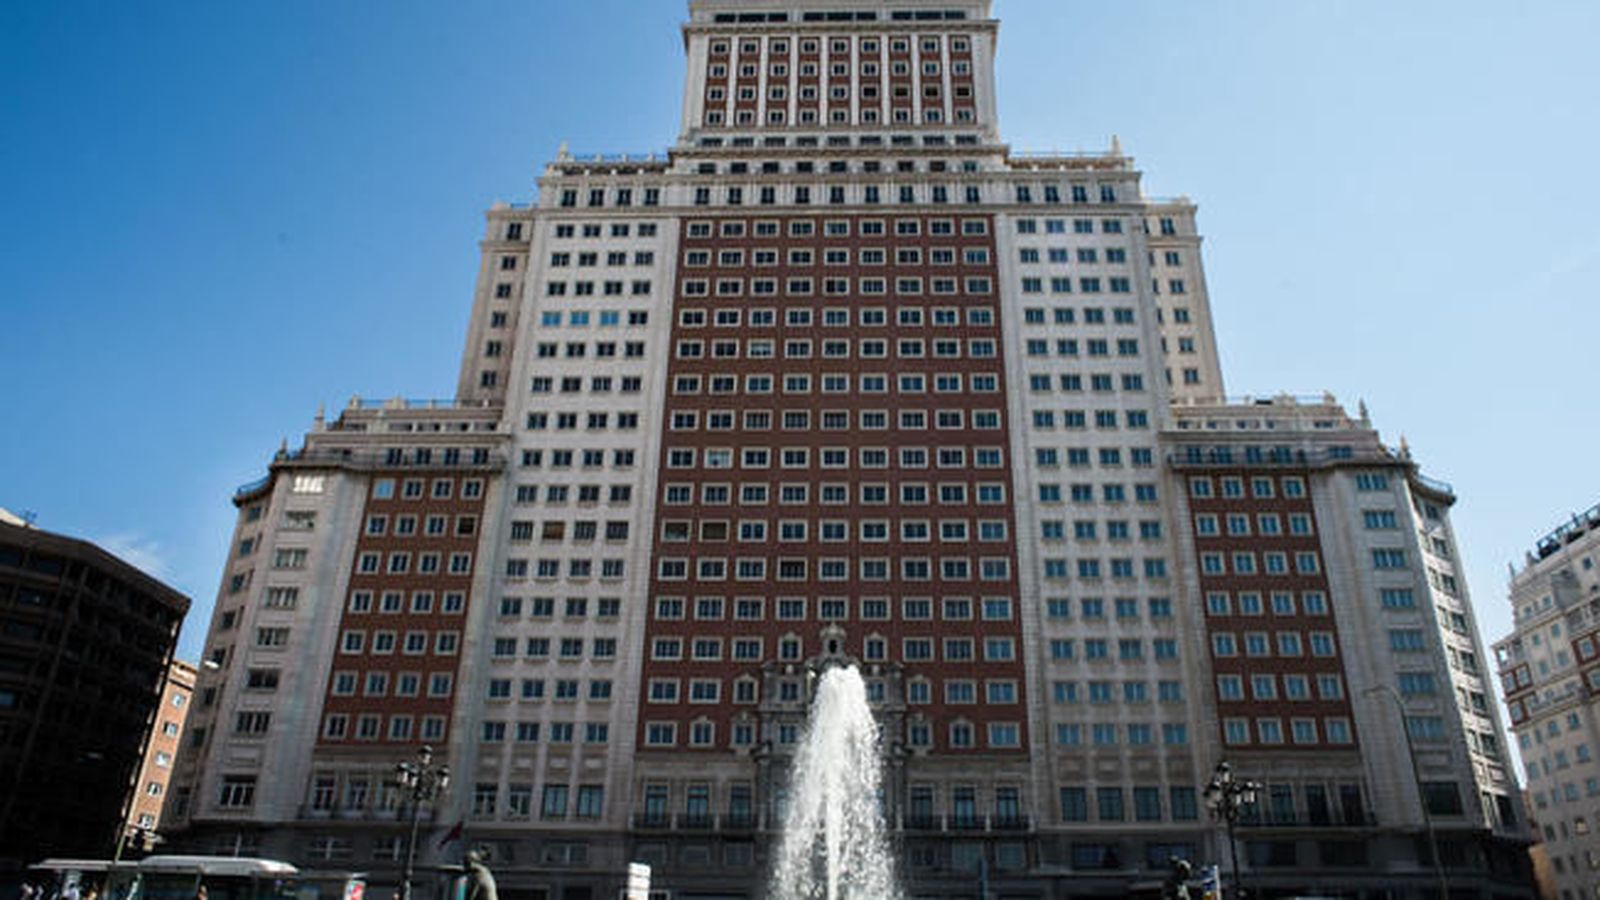 Foto: Edificio de la emblemática Plaza de España de Madrid (Daniel Muñoz)